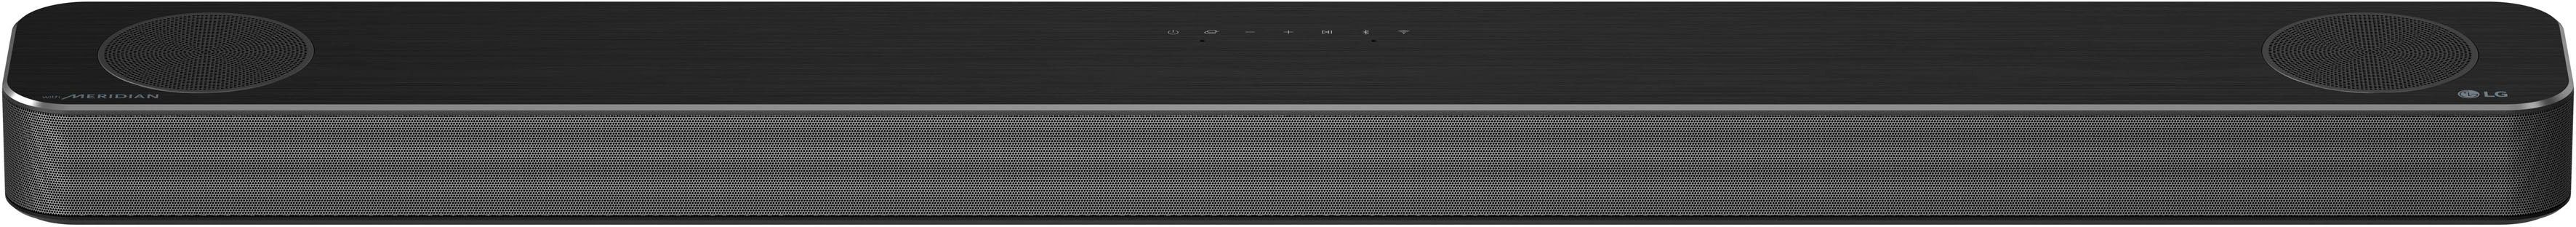 LG SPD75YA 3.1.2 W) (WiFi), 400 Soundbar (Bluetooth, WLAN